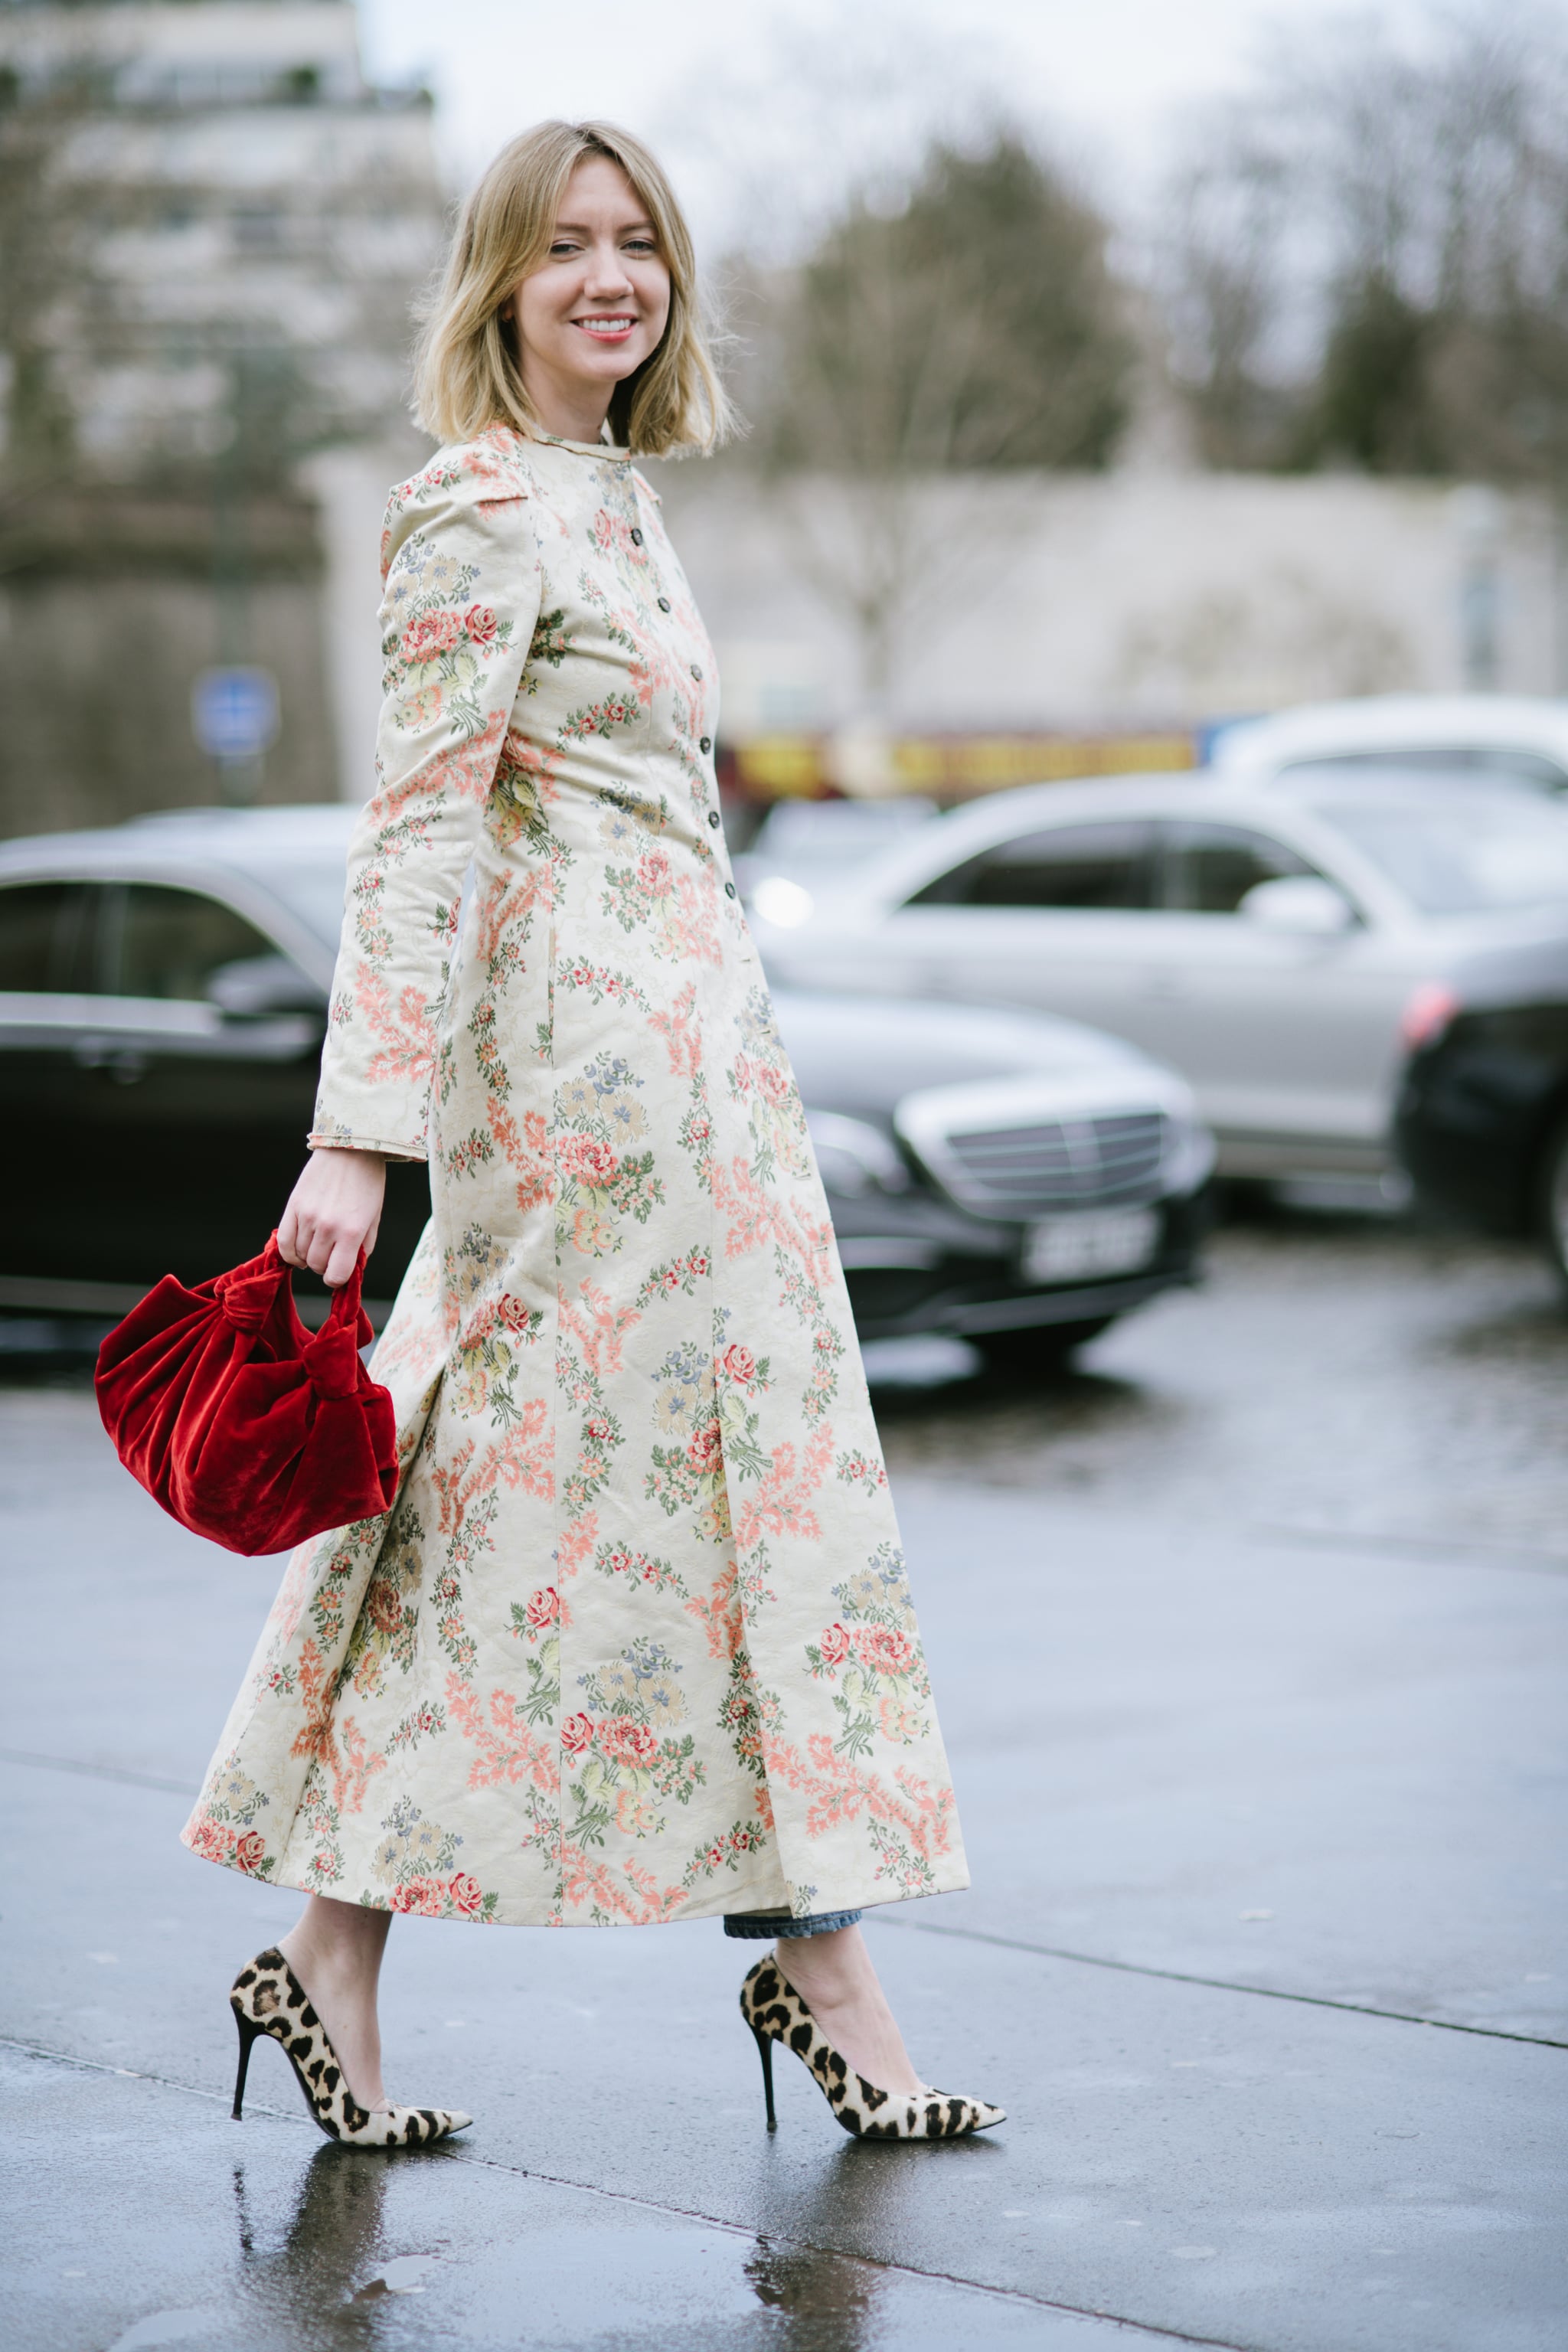 How to Wear a Maxi Dress in Winter | POPSUGAR Fashion